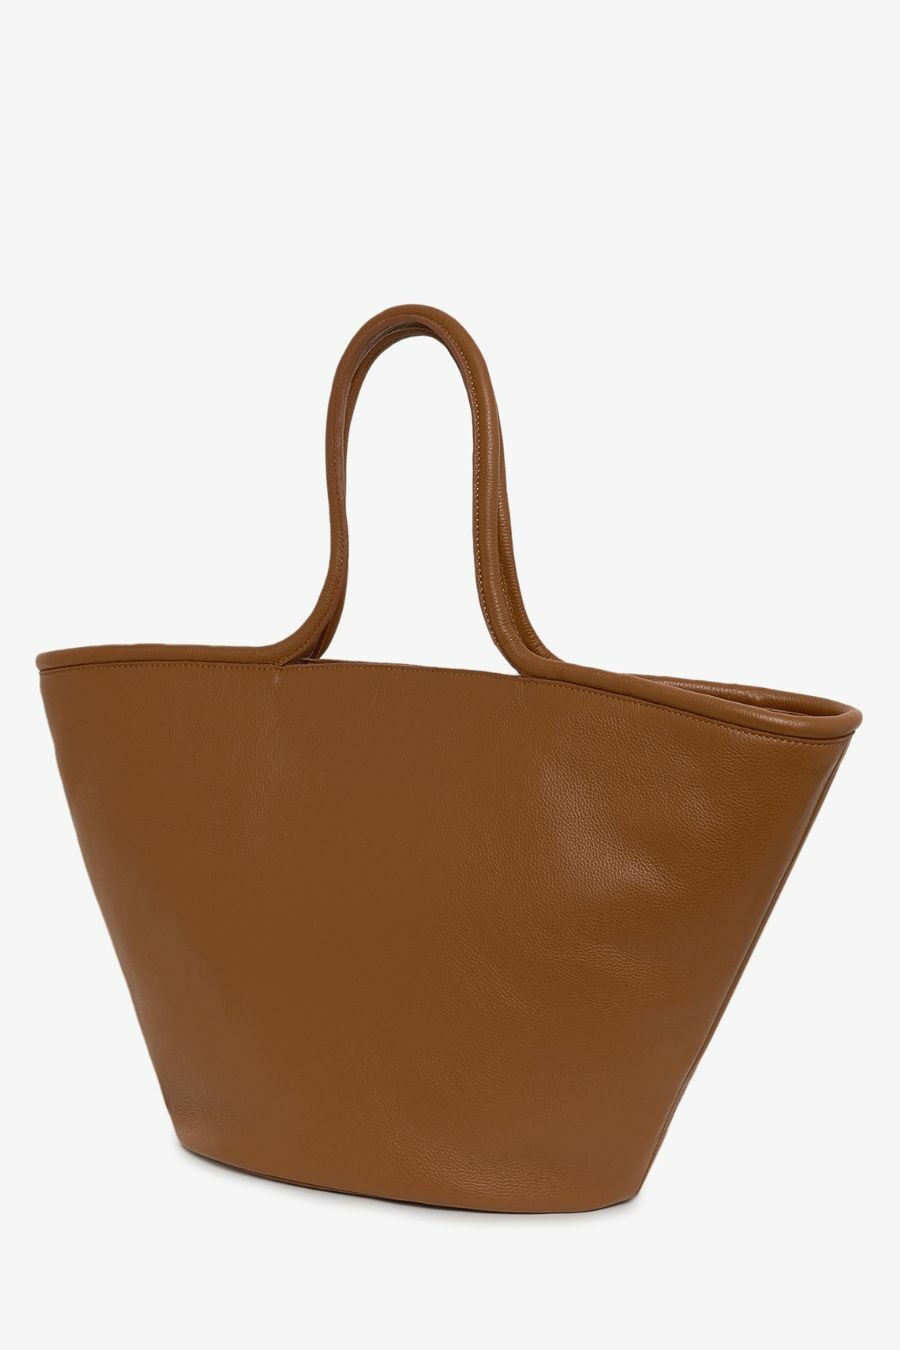 Rita Row leather Schluz basket bag handbag brown leather | pipe and row